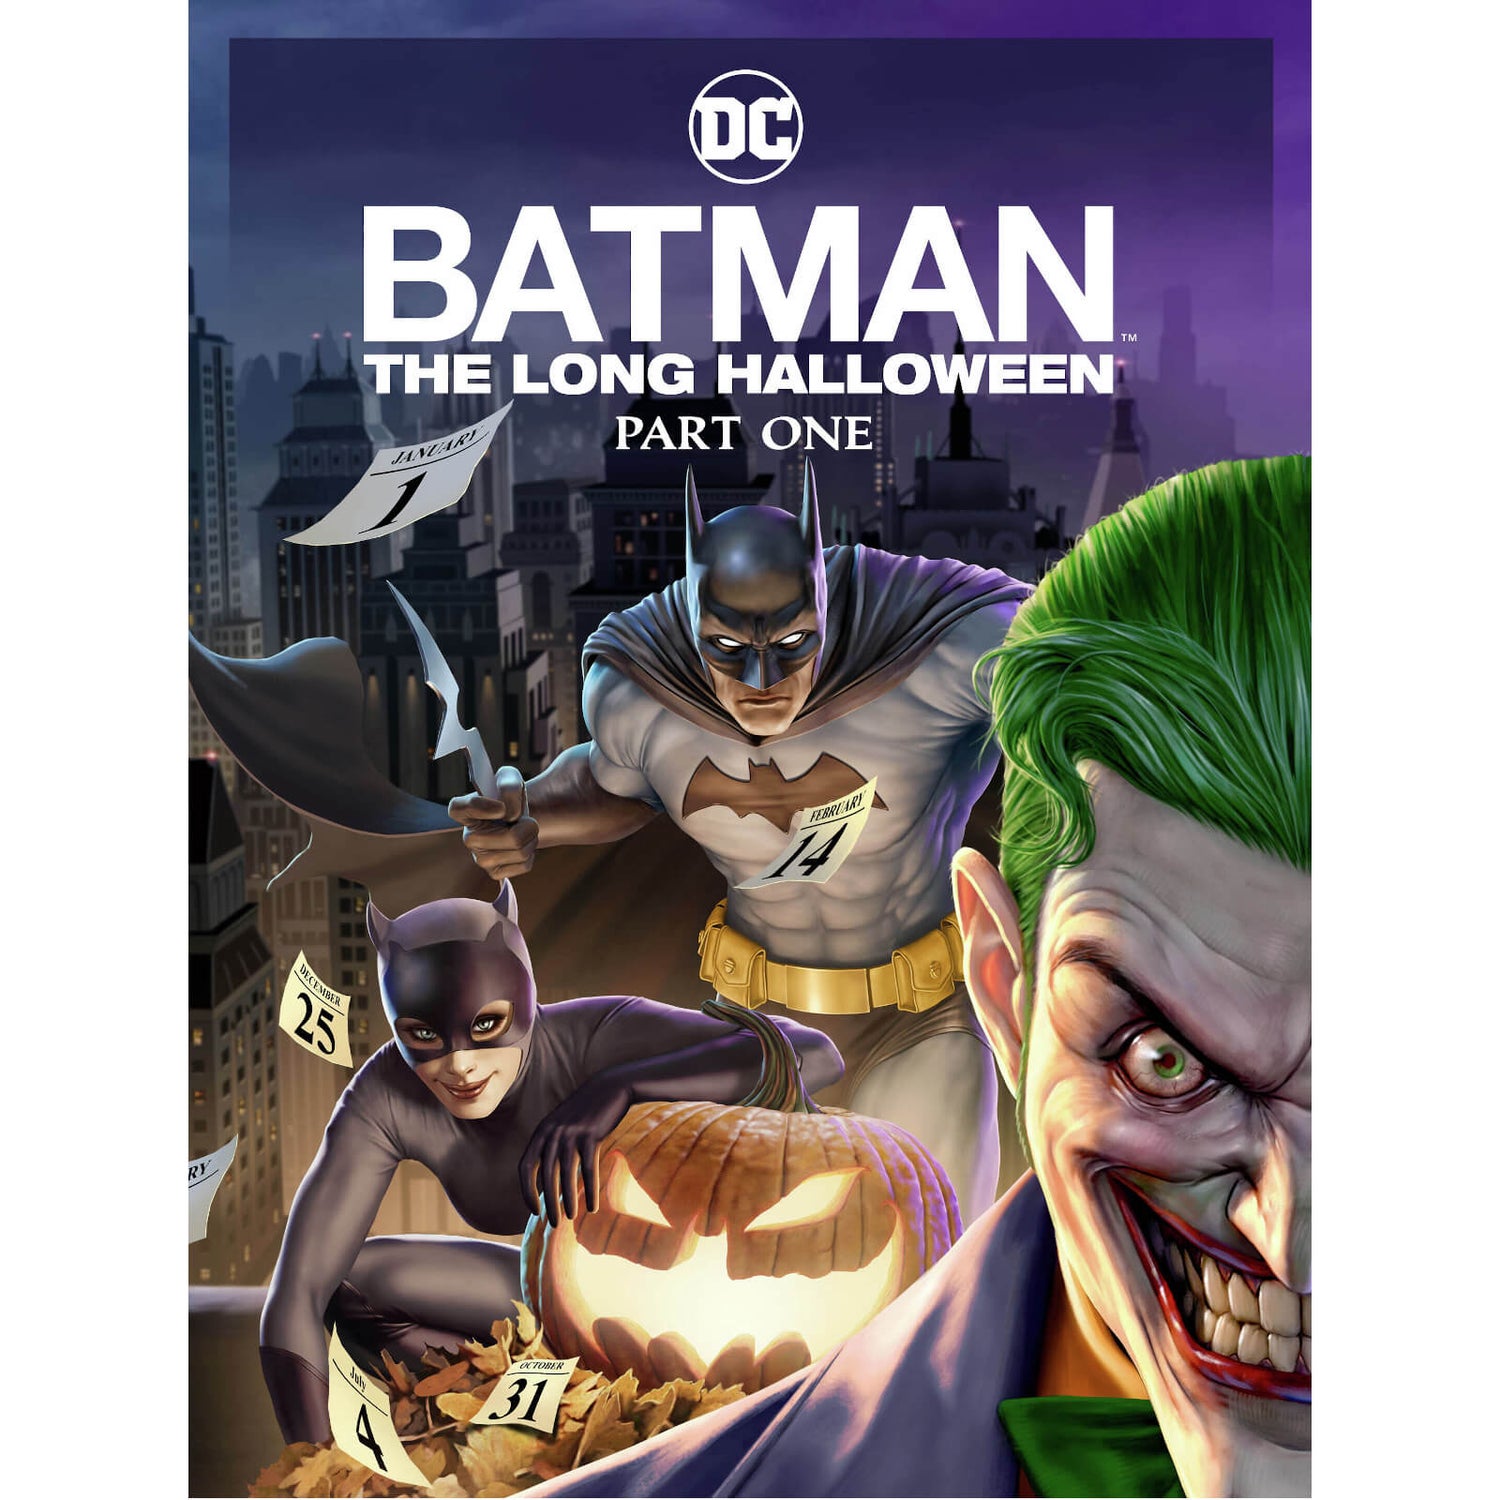 Batman: The Long Halloween Part 1 - Limited Edition Blu-ray Steelbook